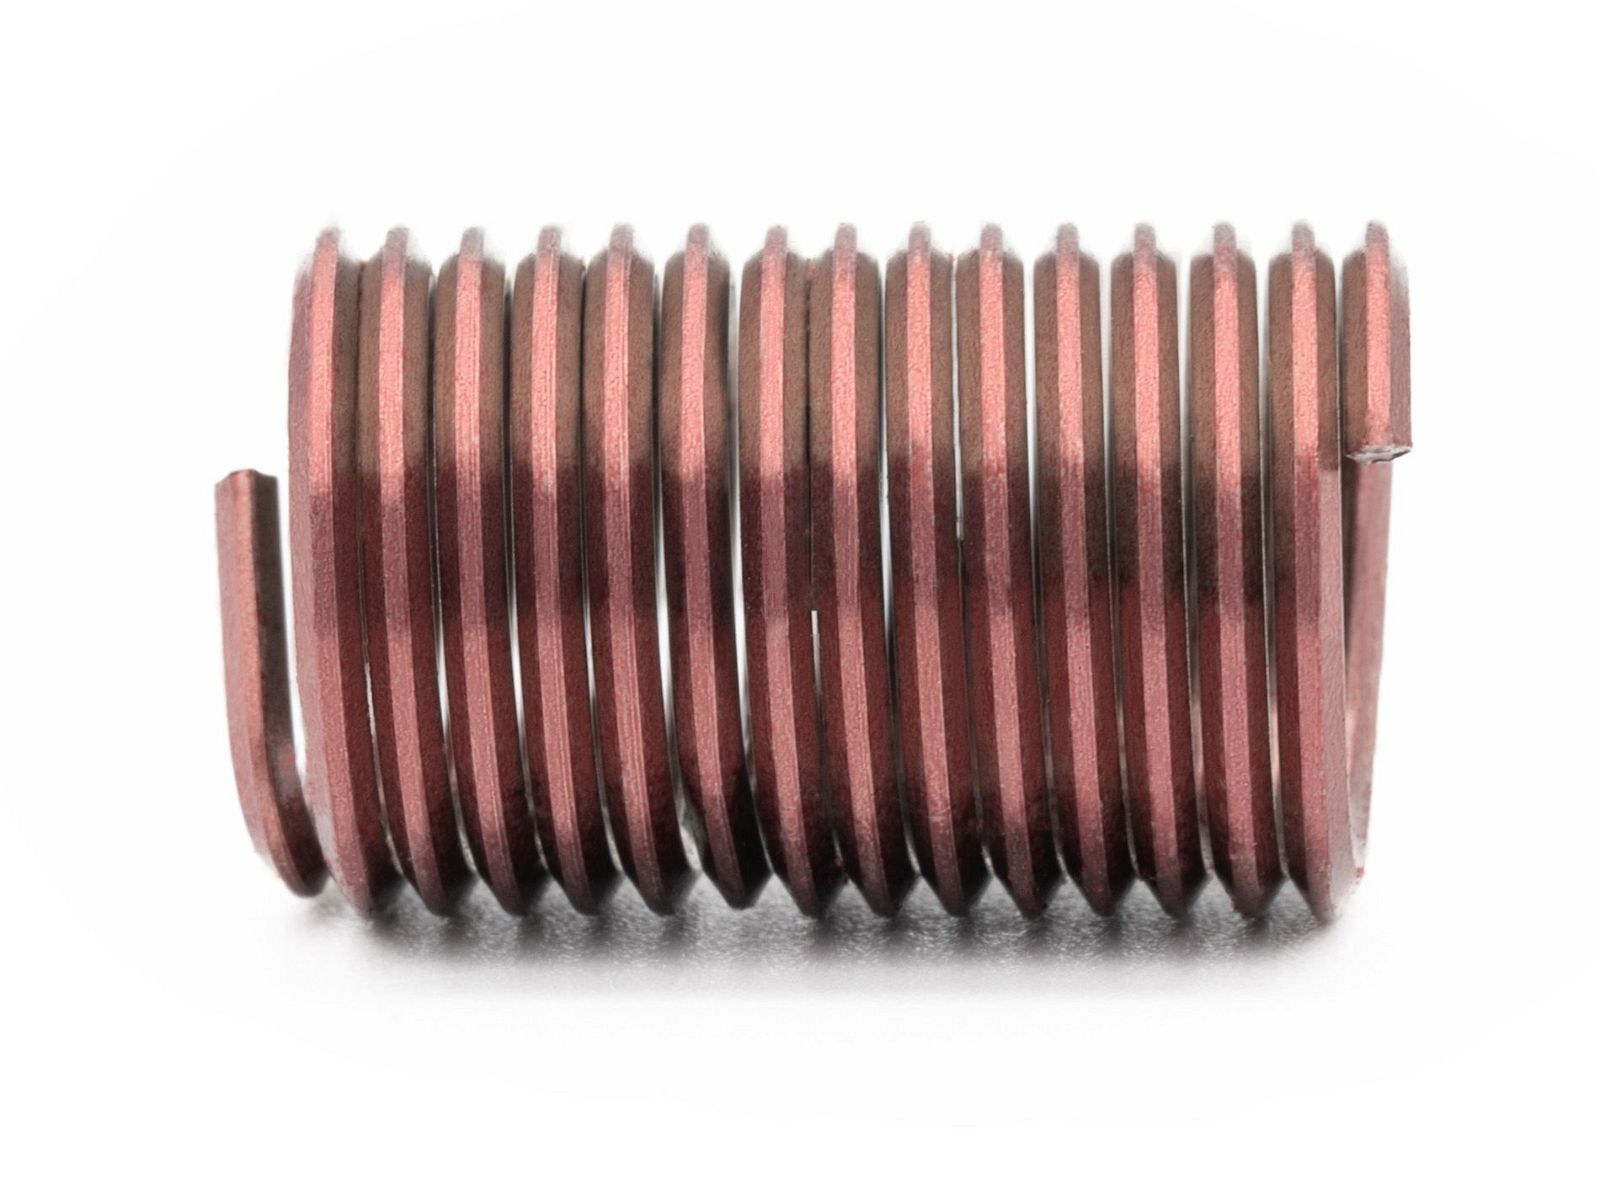 BaerCoil Drahtgewindeeinsätze M 8 x 1,25 - 2,5 D (20 mm) - screw grip (schraubensichernd) - 100 Stk.